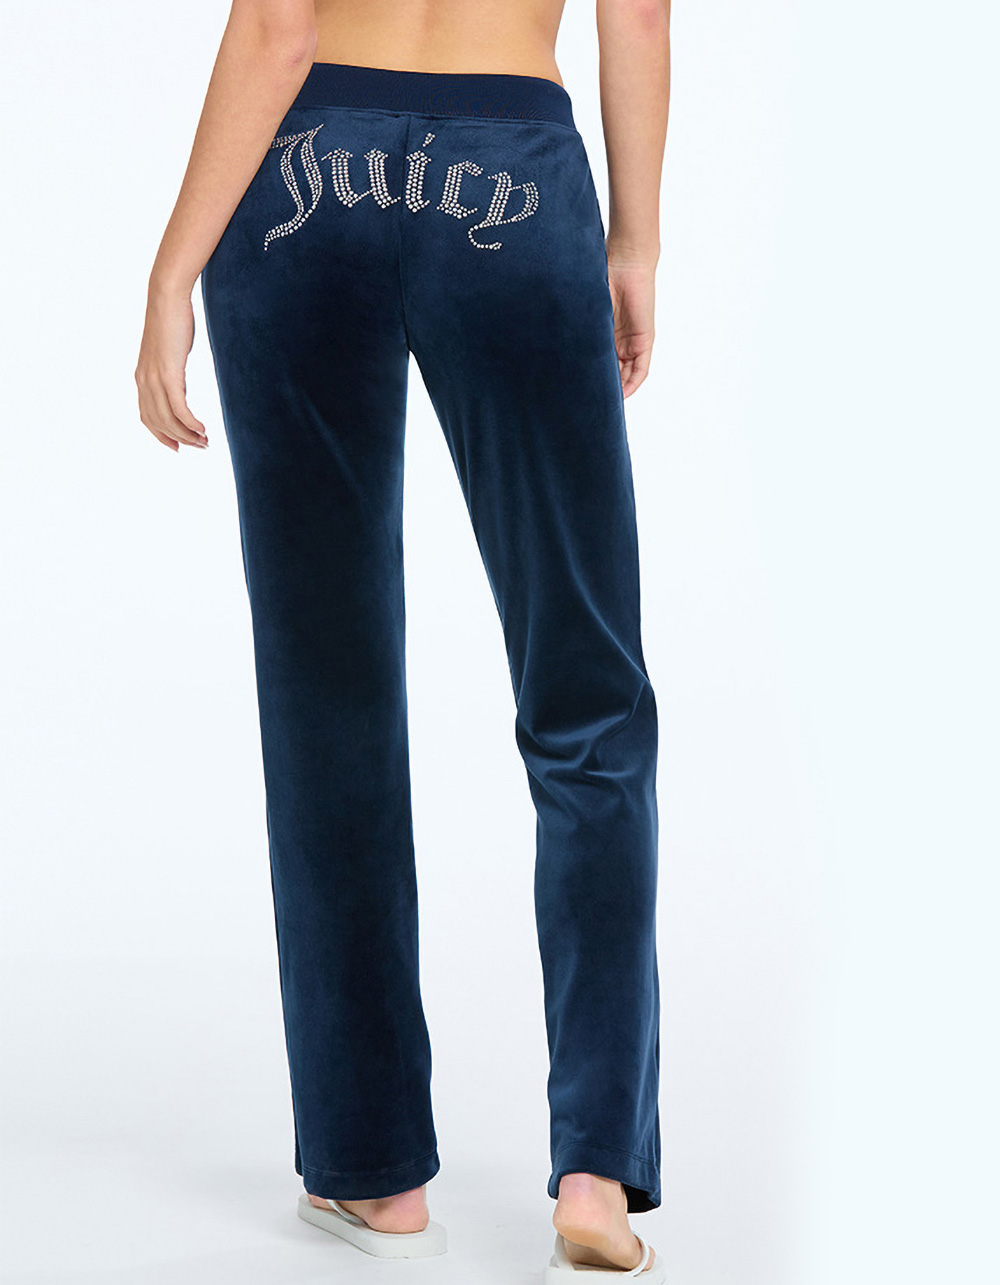 Juicy Couture, Intimates & Sleepwear, 3 Pairs Juicy Couture Underwear